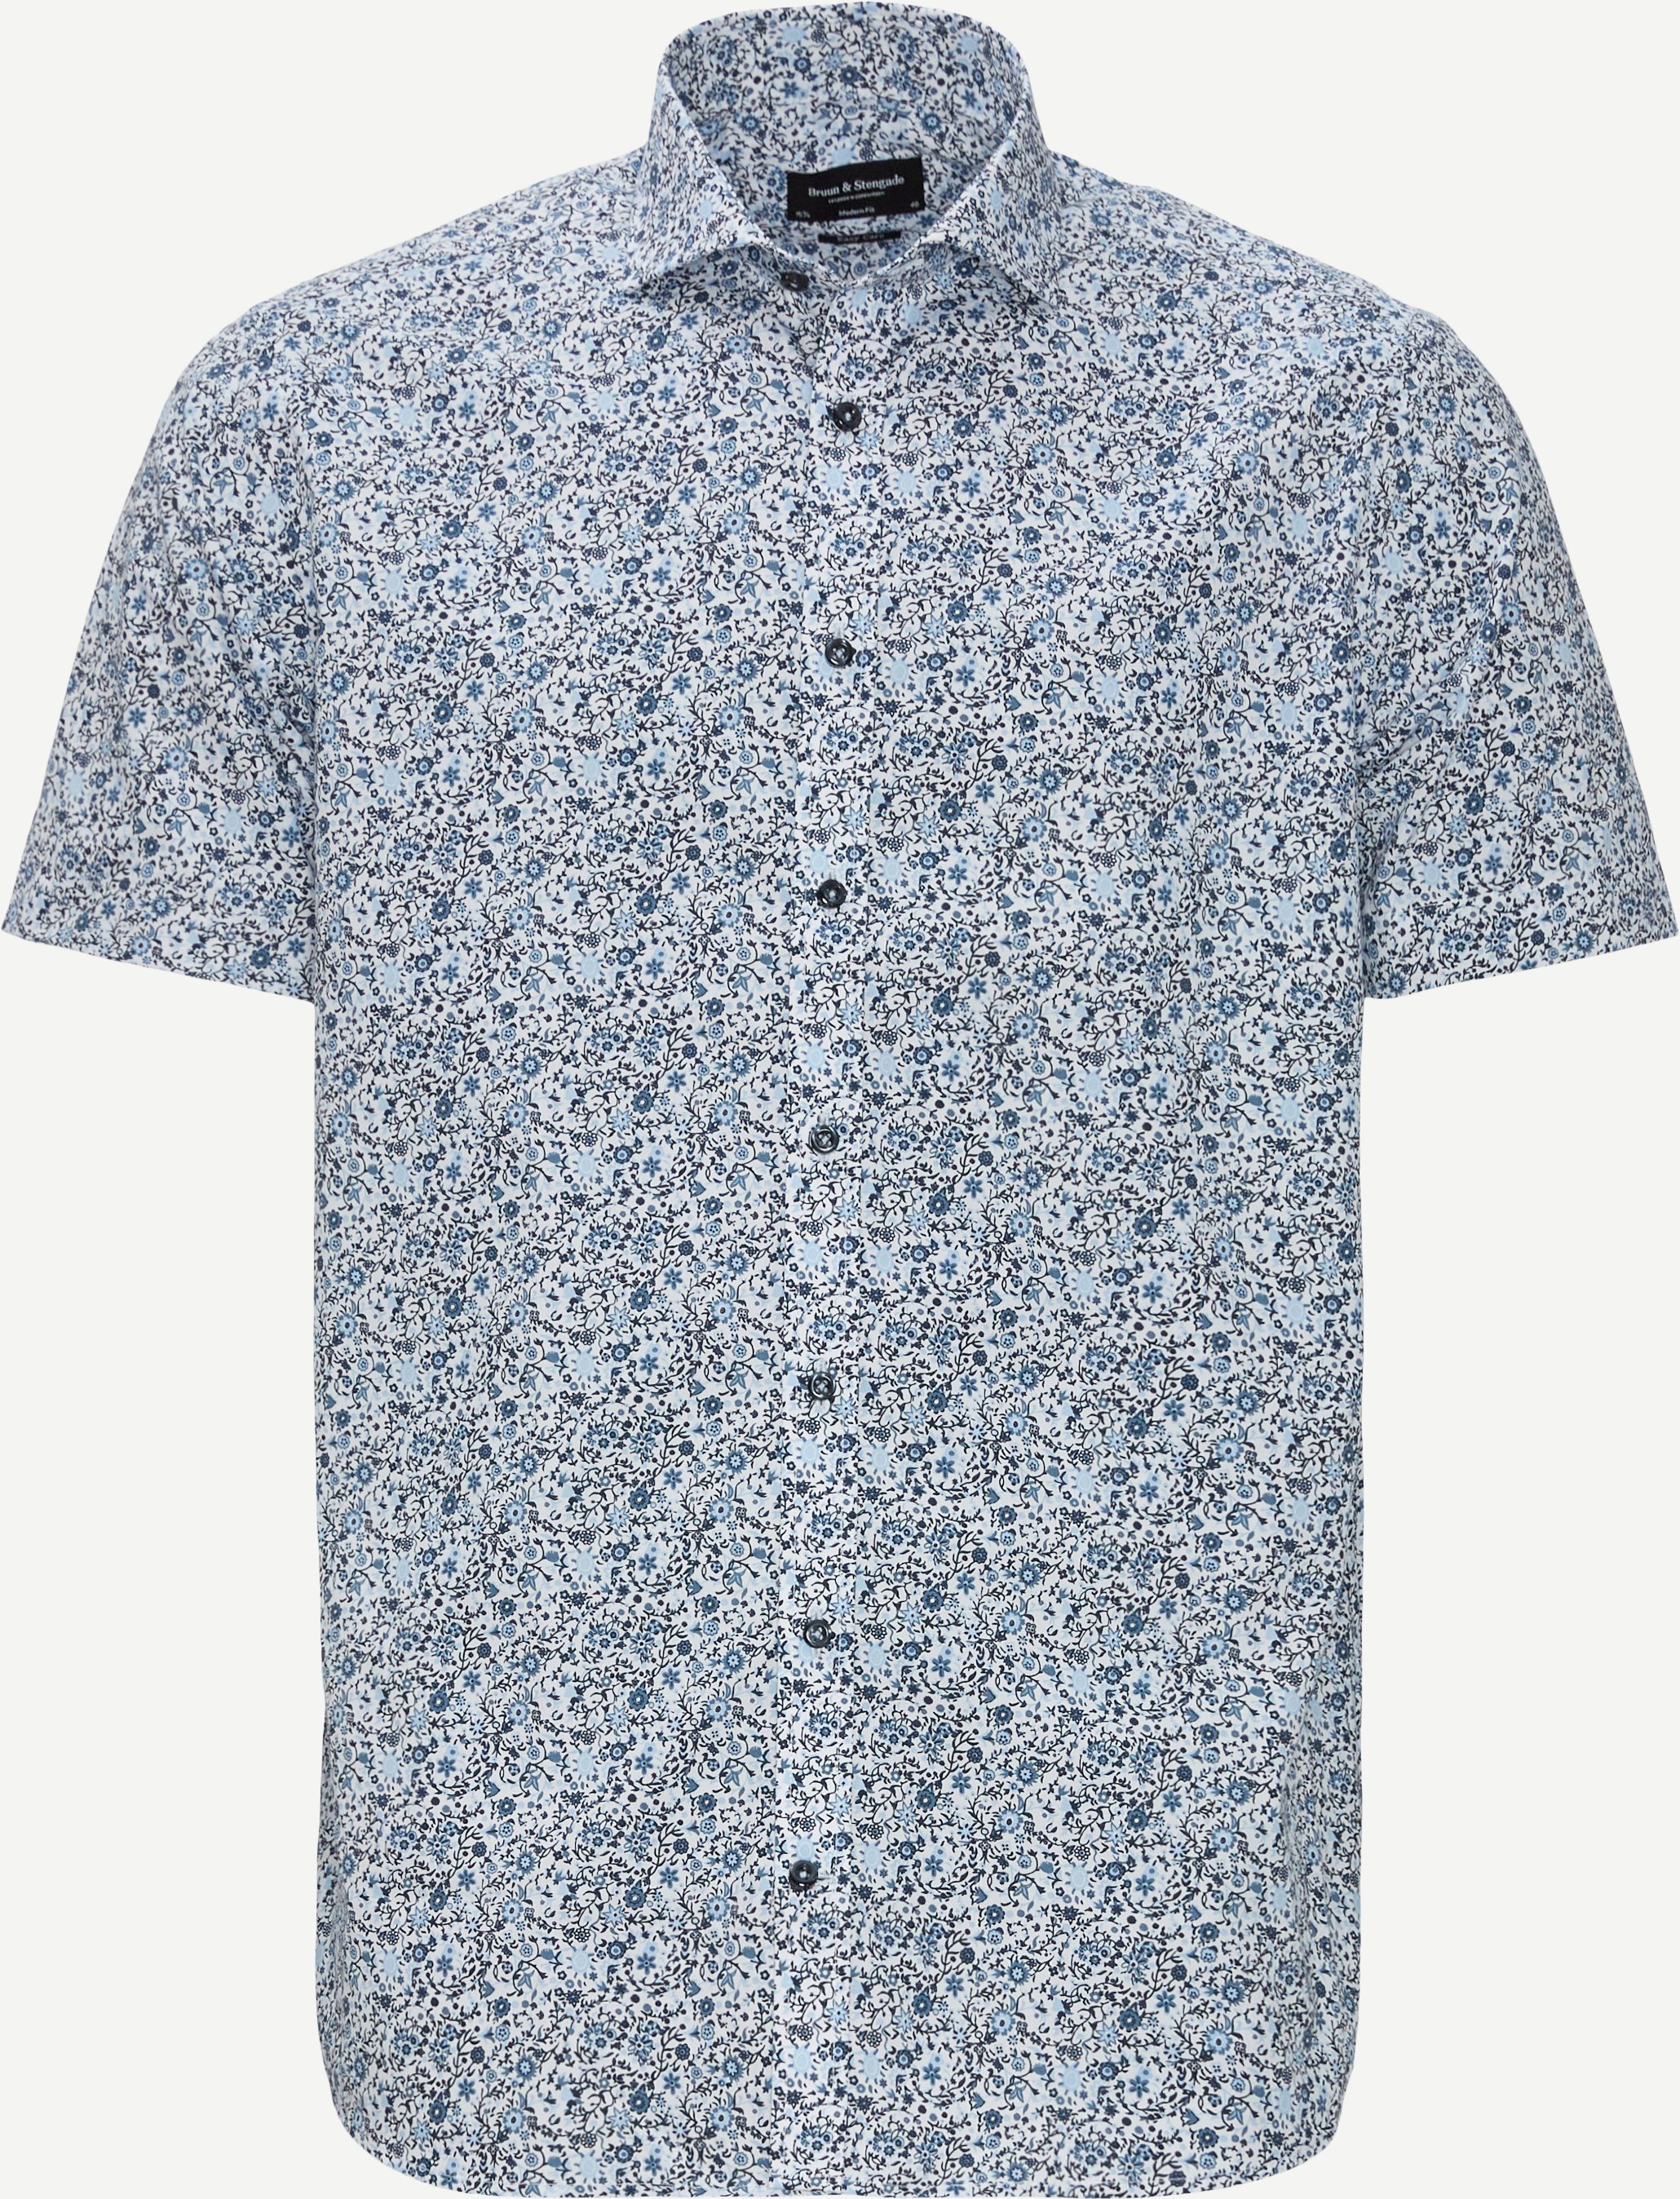 Kortärmade skjortor - Modern fit - Blå